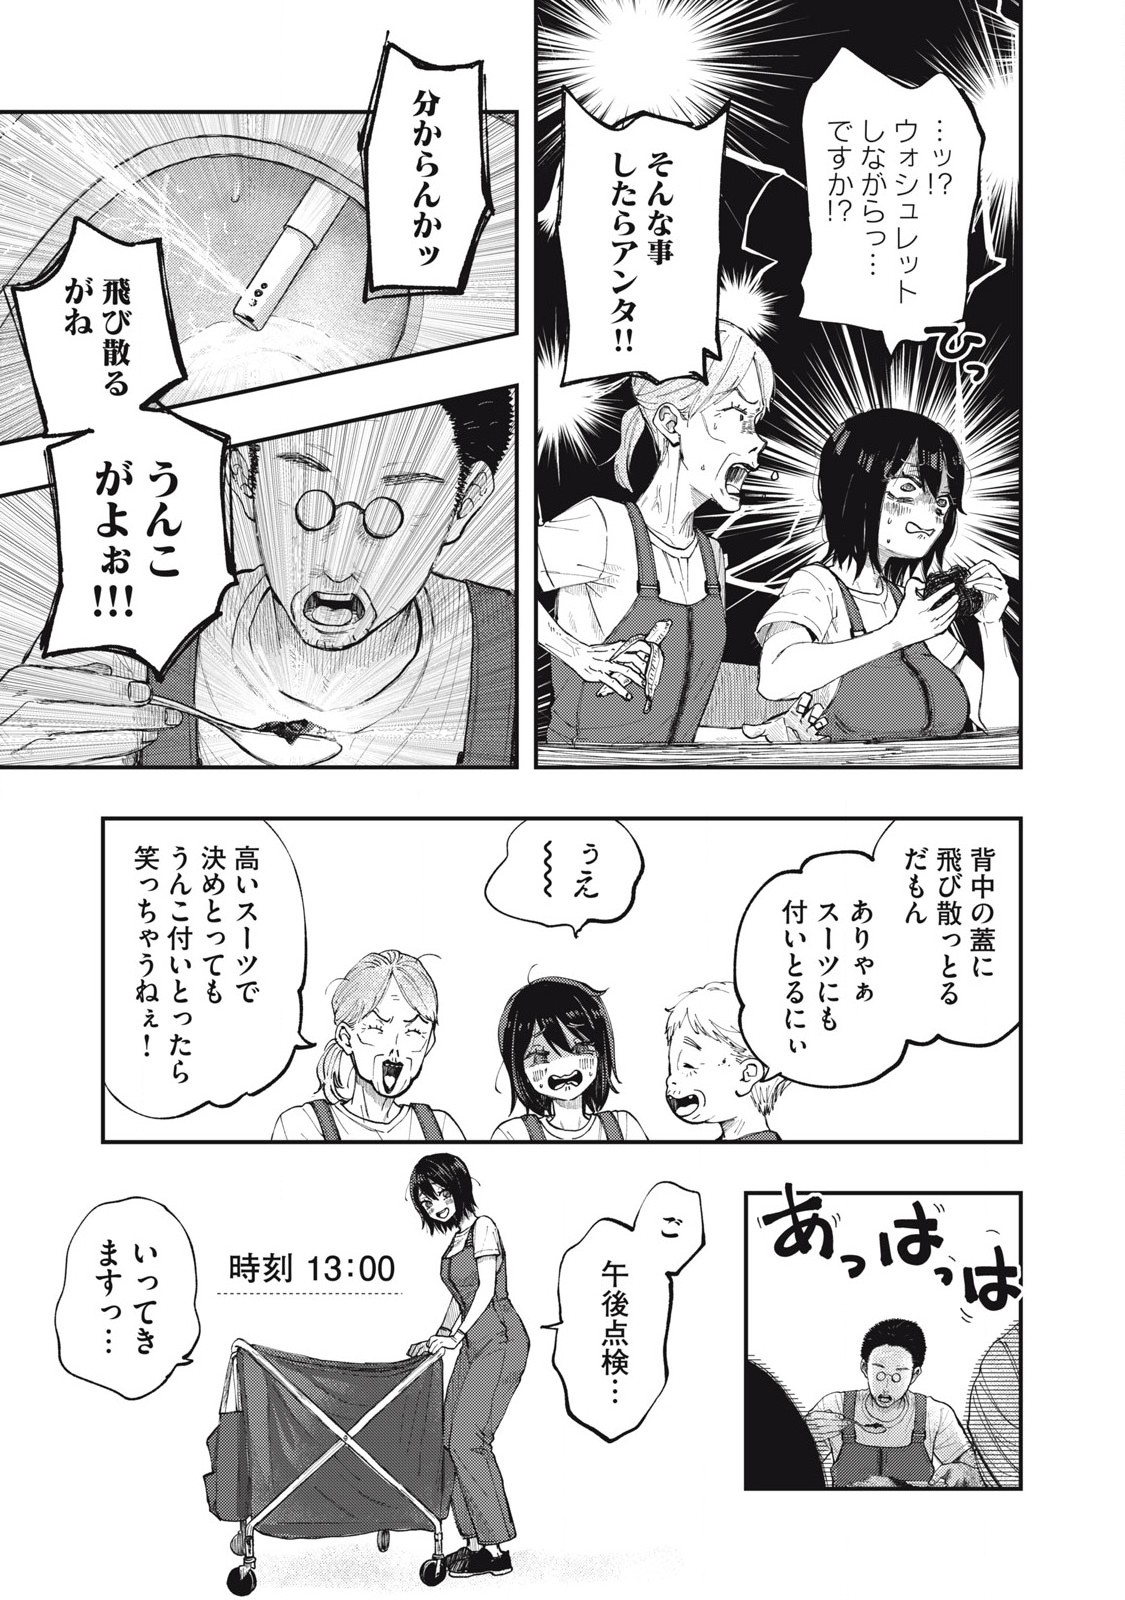 Seisouin Nono-chan Kyou no Tsubuyaki - Chapter 1 - Page 7